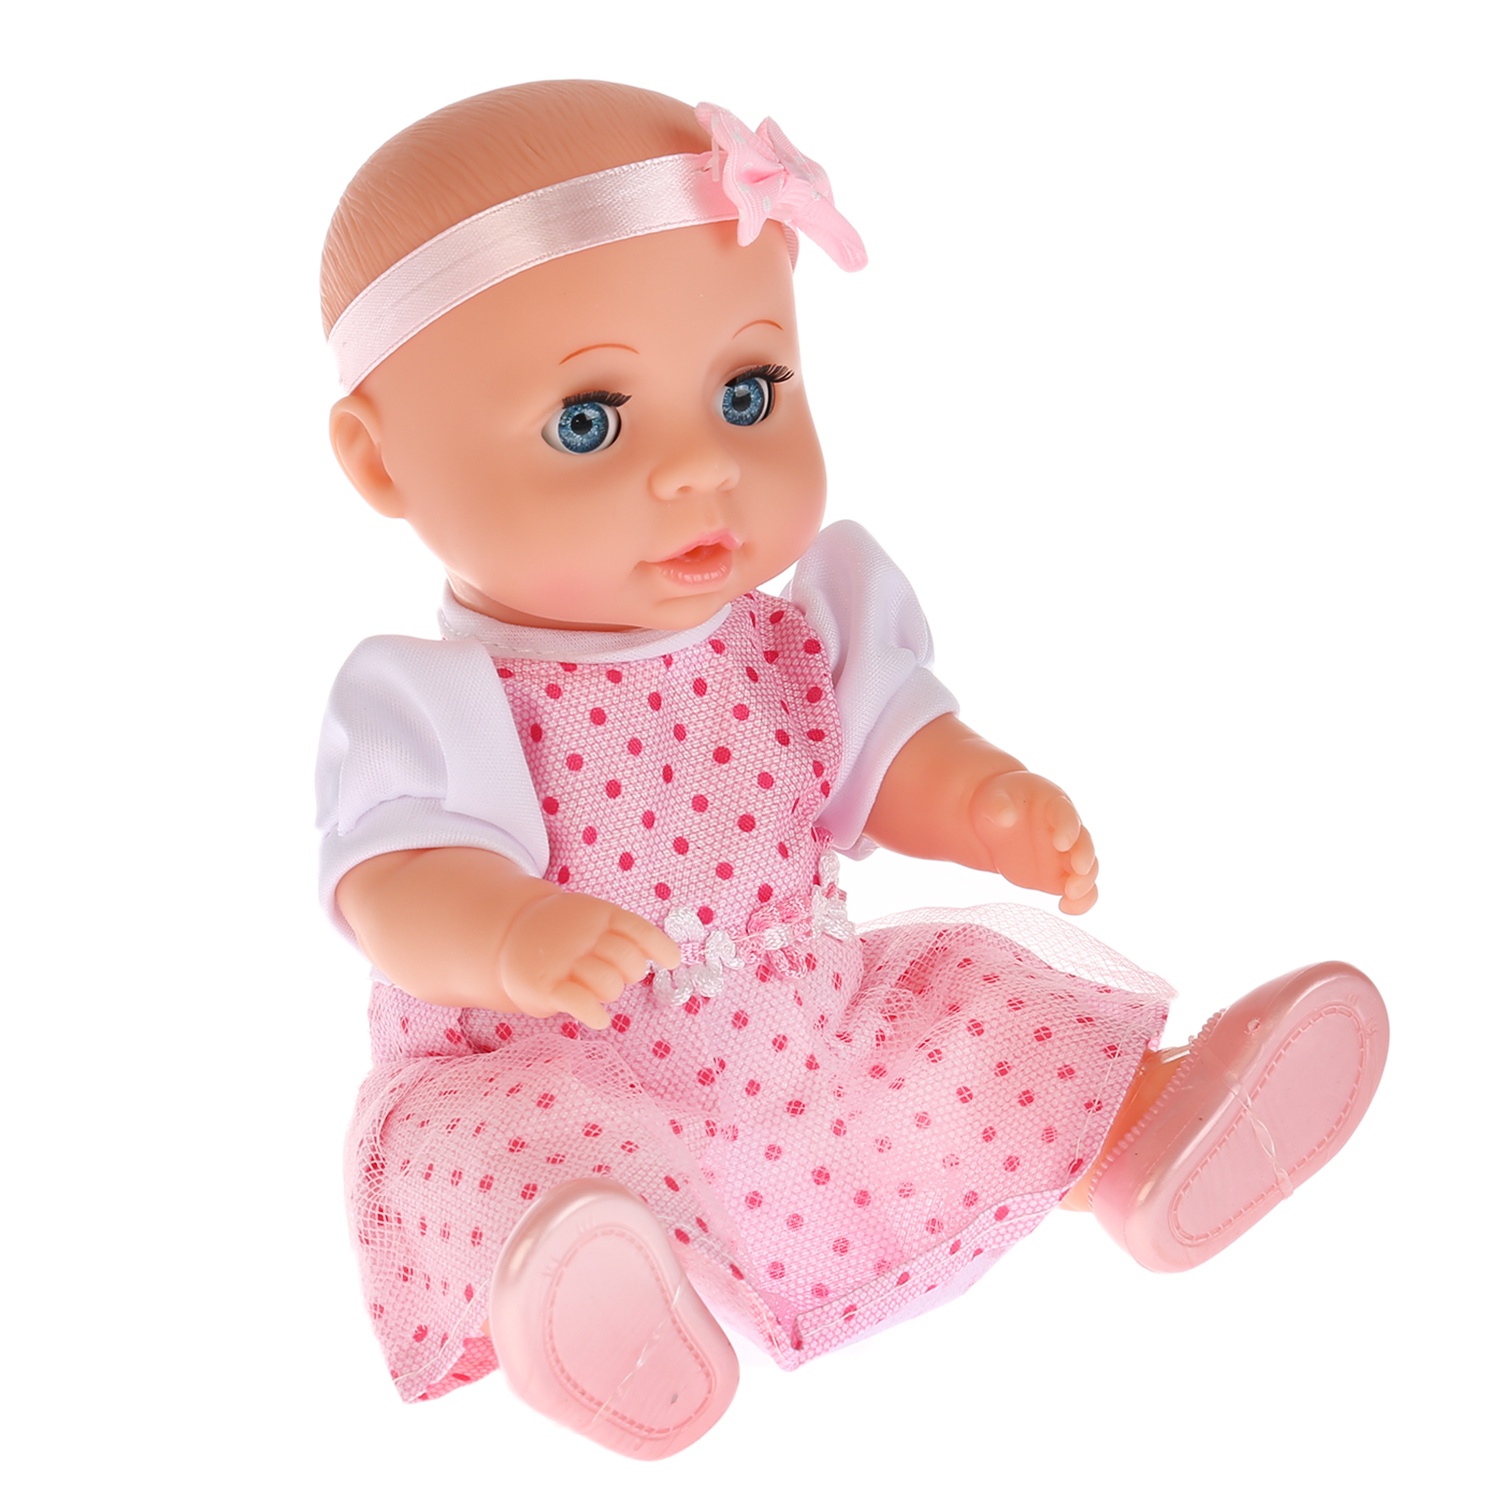 Ка пупси. Интерактивный пупс Карапуз, 20 см, y20dp-BB-ru. Карапузик кукла. Бупсы. Резиновые куклы для детей.